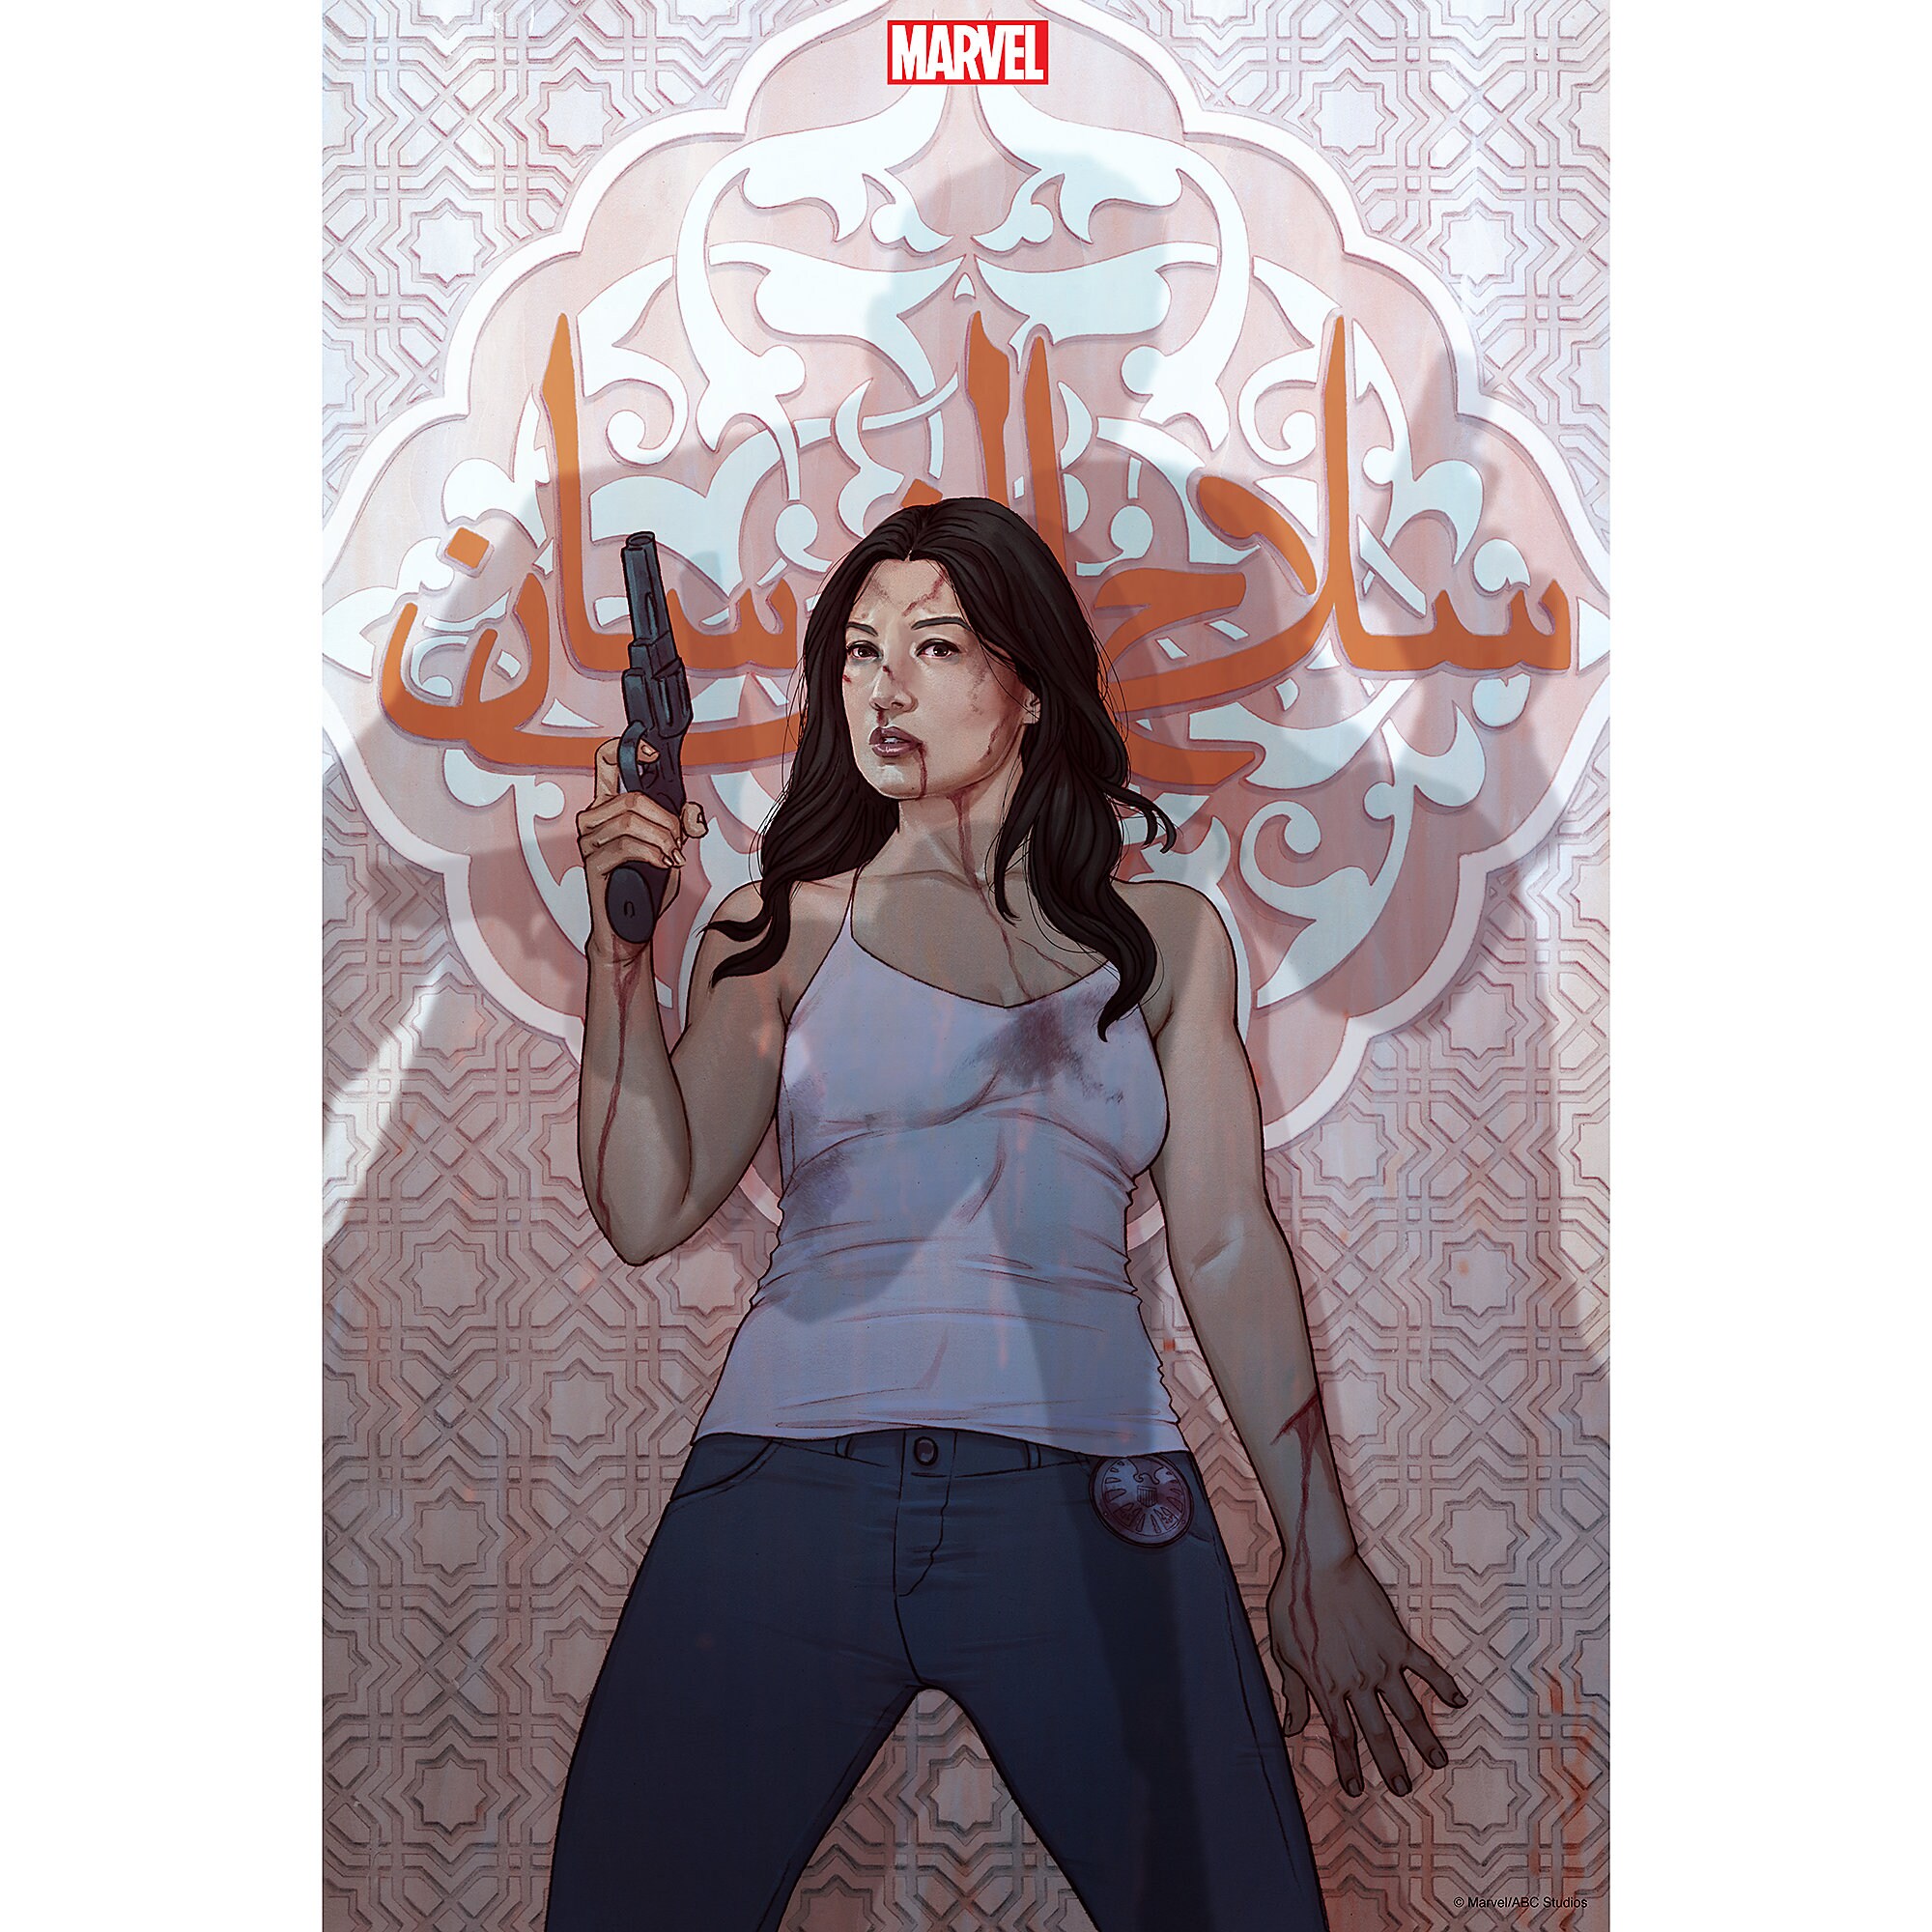 Marvel's Agents of S.H.I.E.L.D. ''Melinda'' Print - Limited Edition